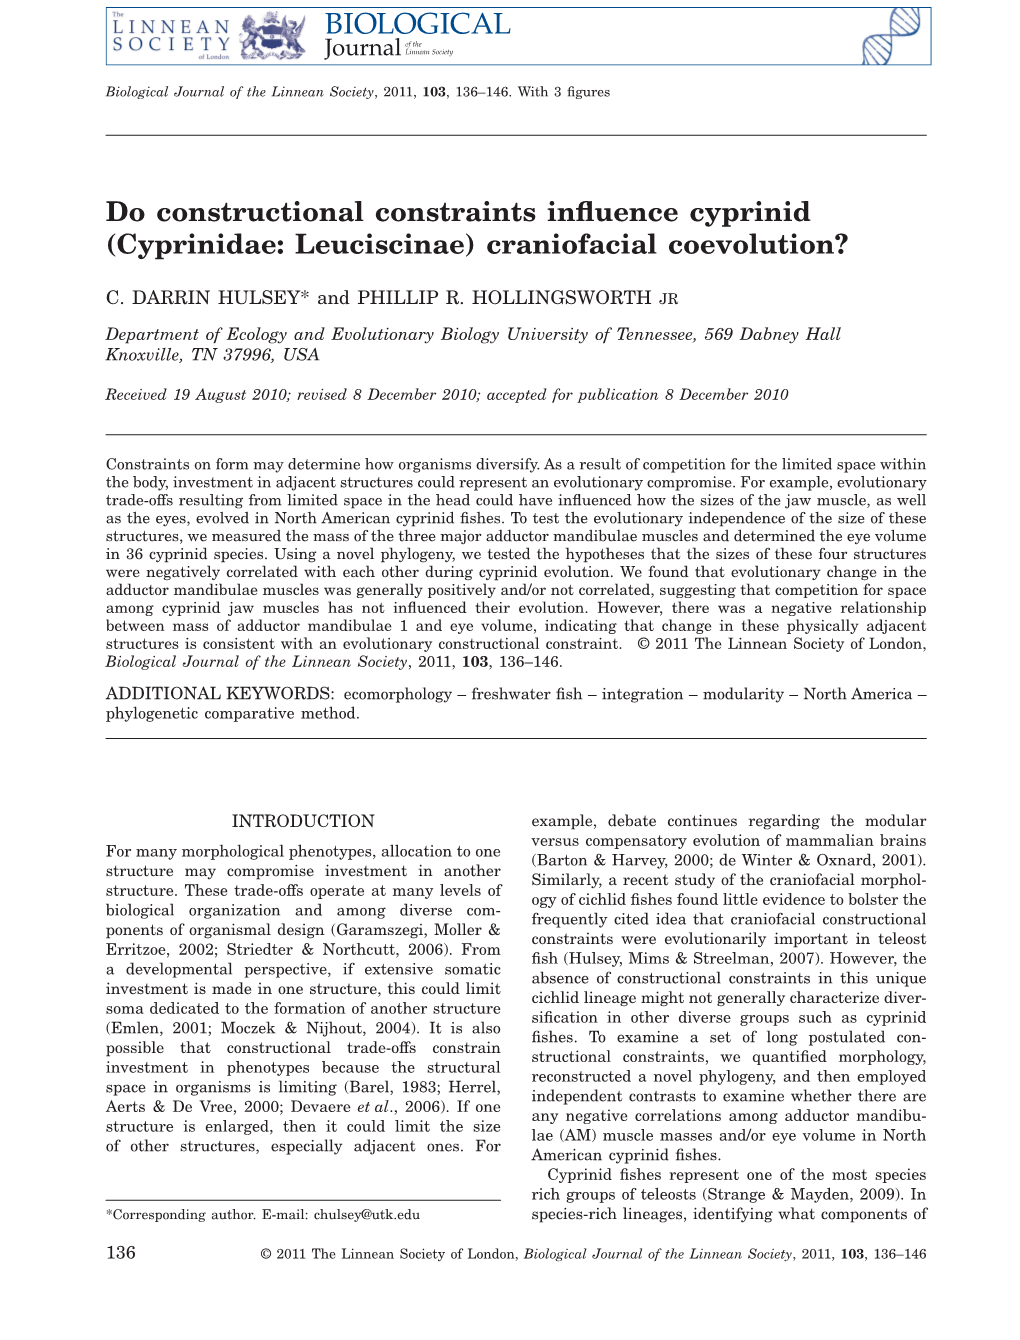 Do Constructional Constraints Influence Cyprinid (Cyprinidae